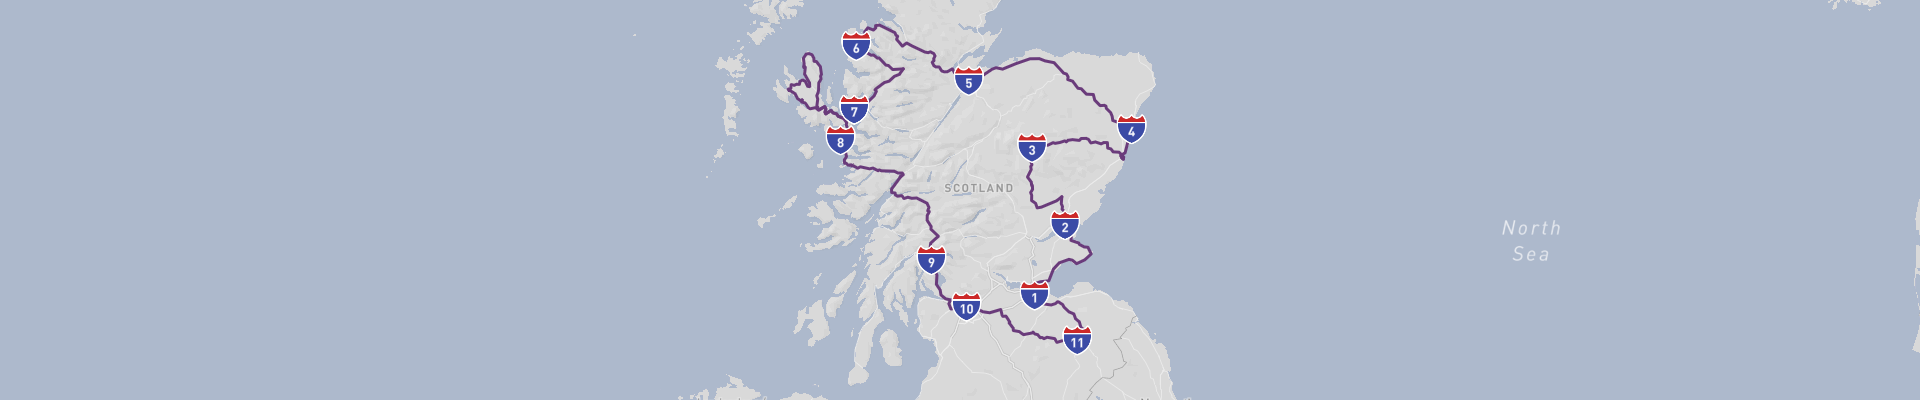 Itinéraire Scotland 